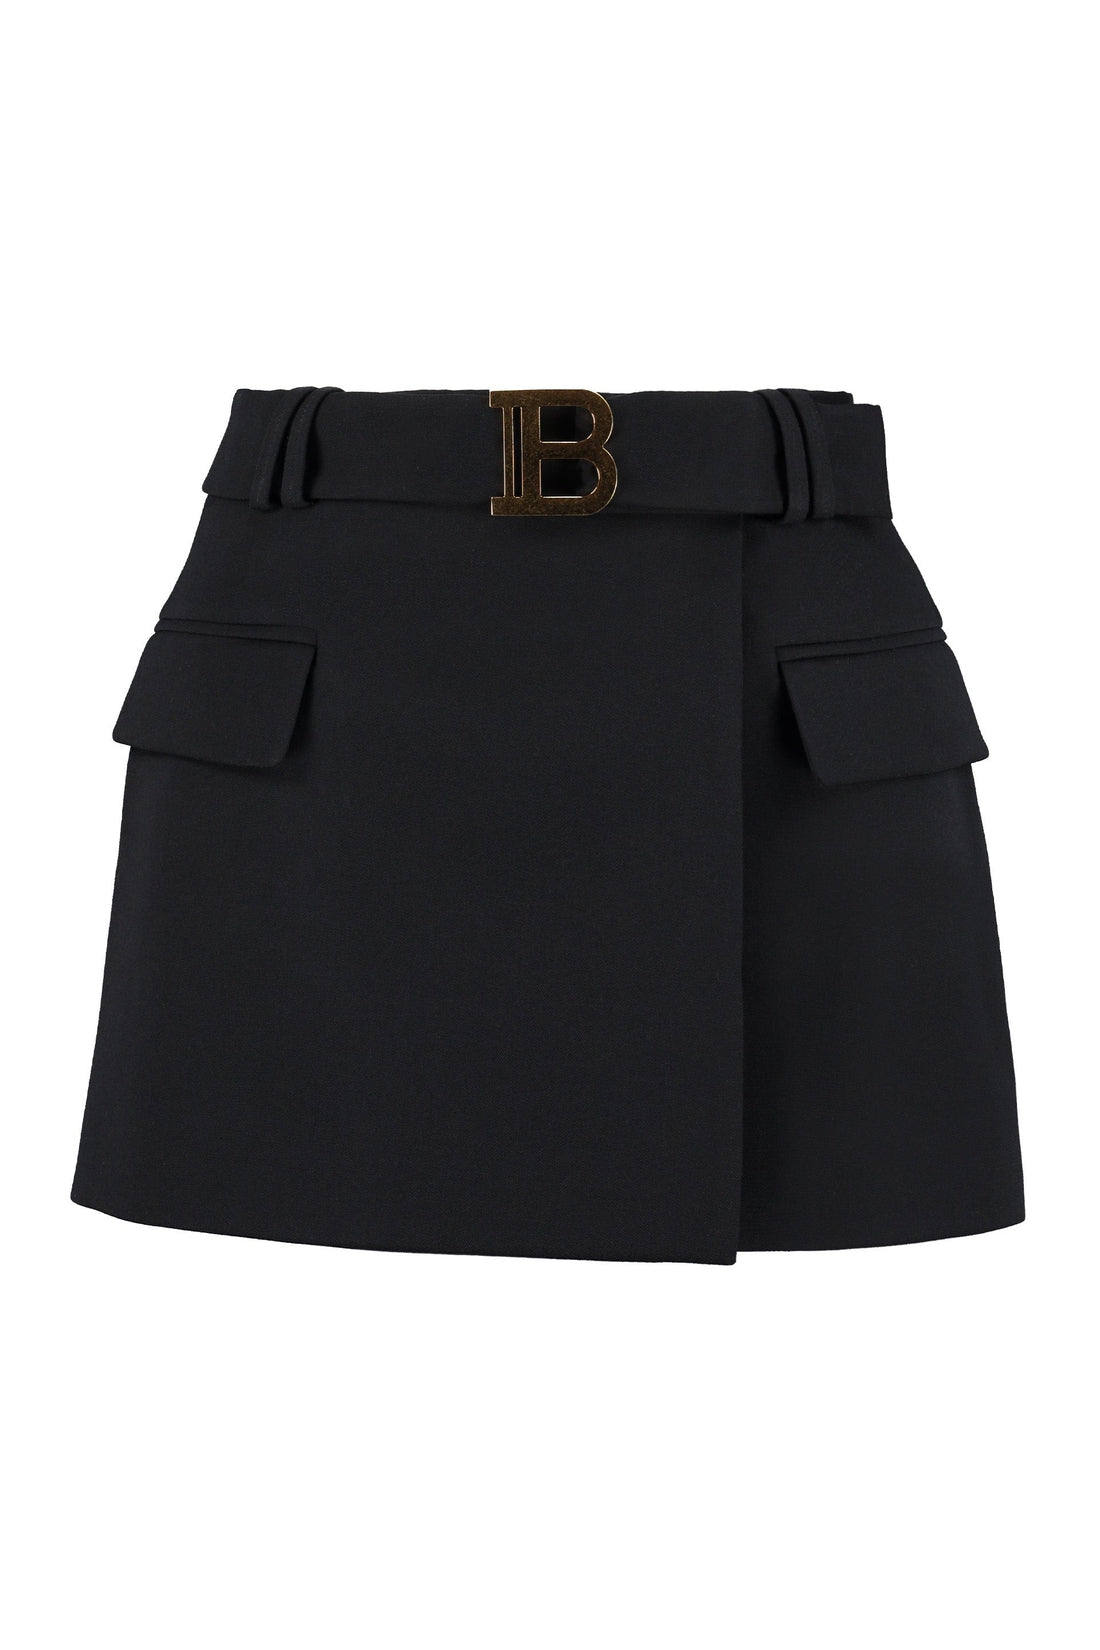 Balmain-OUTLET-SALE-Wool mini skirt-ARCHIVIST